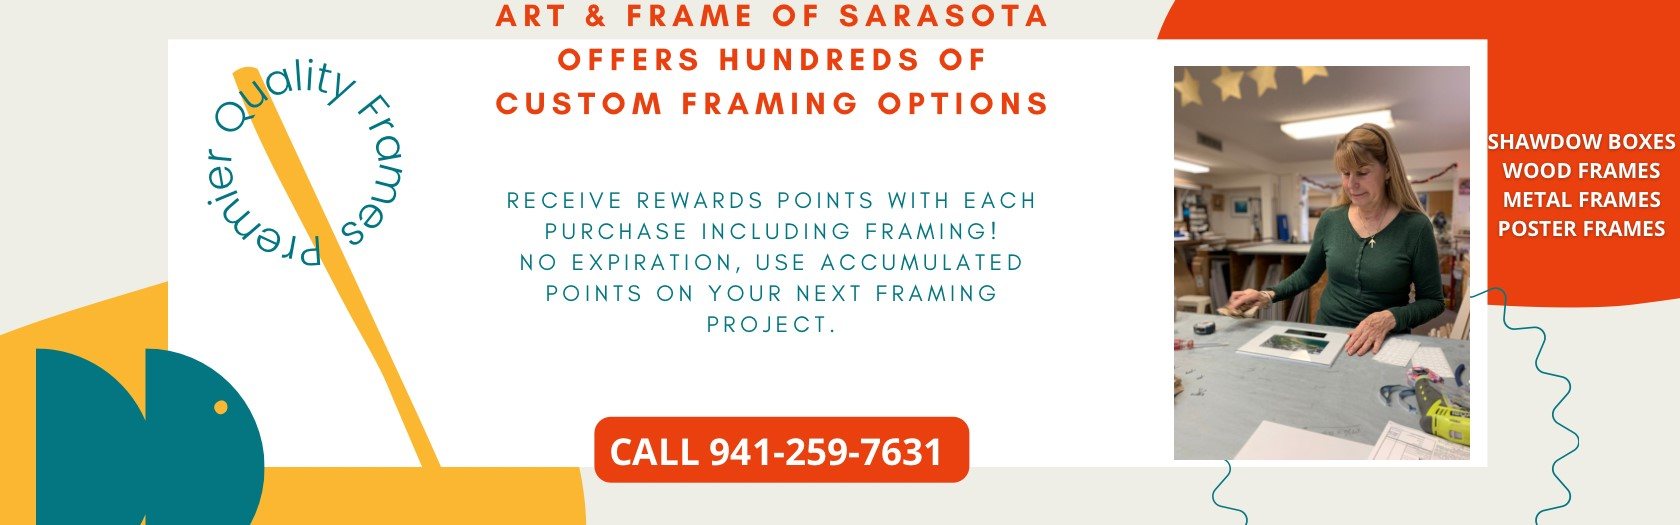 Strathmore 400 Series Toned Gray Sketch Pad 9x12 - Art and Frame of Sarasota